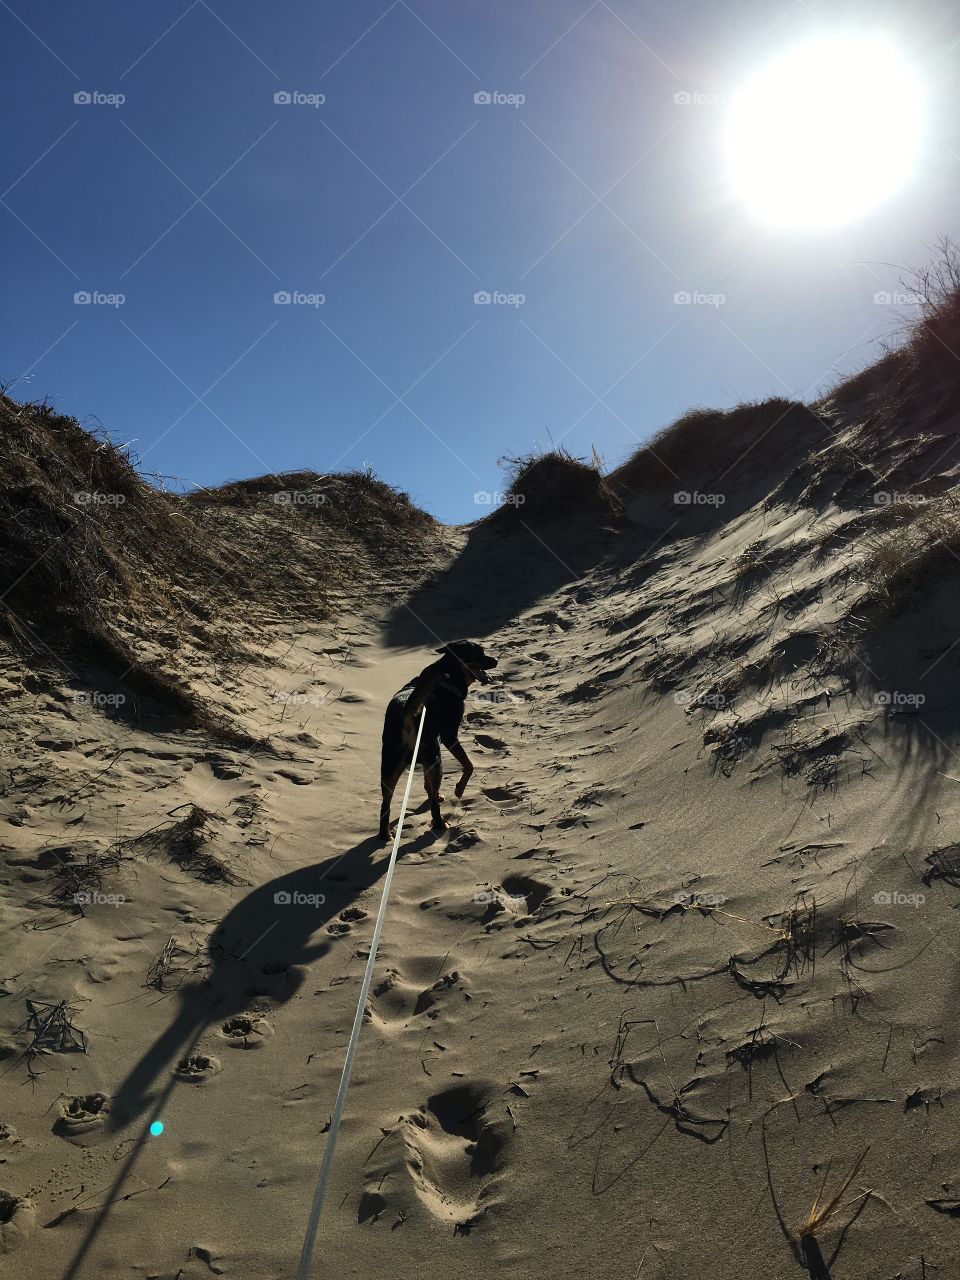 Dog on the dunes 